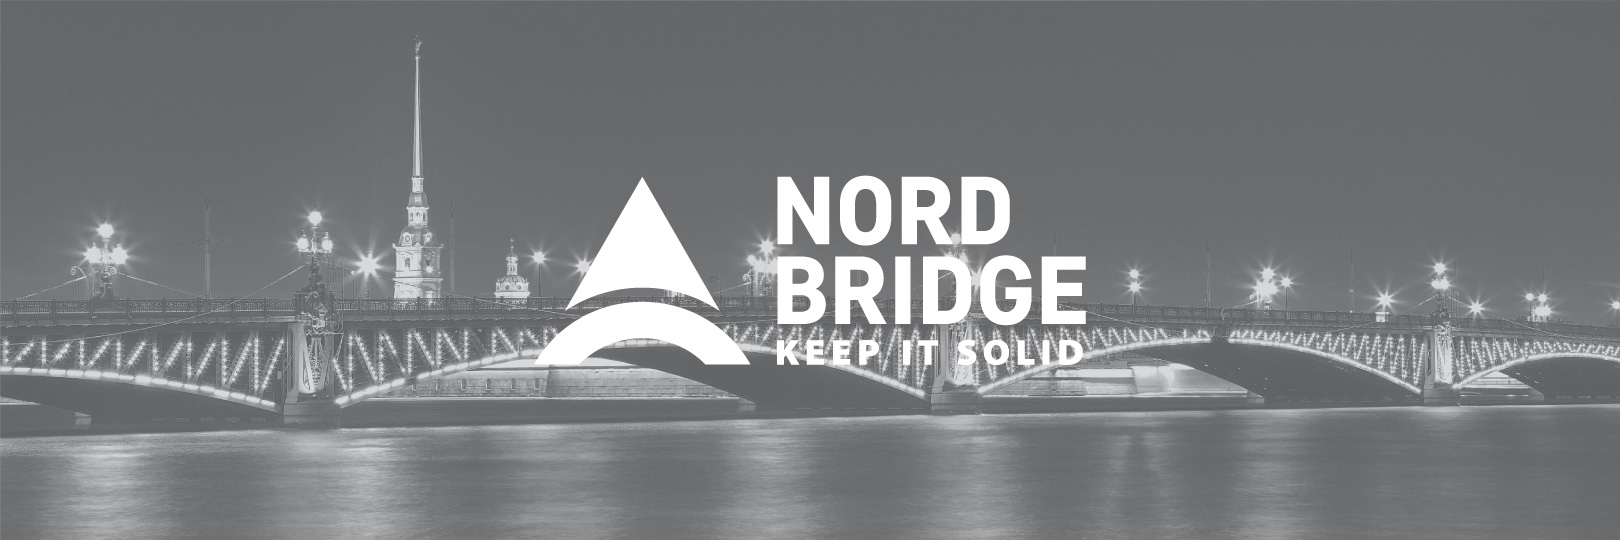 Nord Bridge branding and logo design by Indigo branding